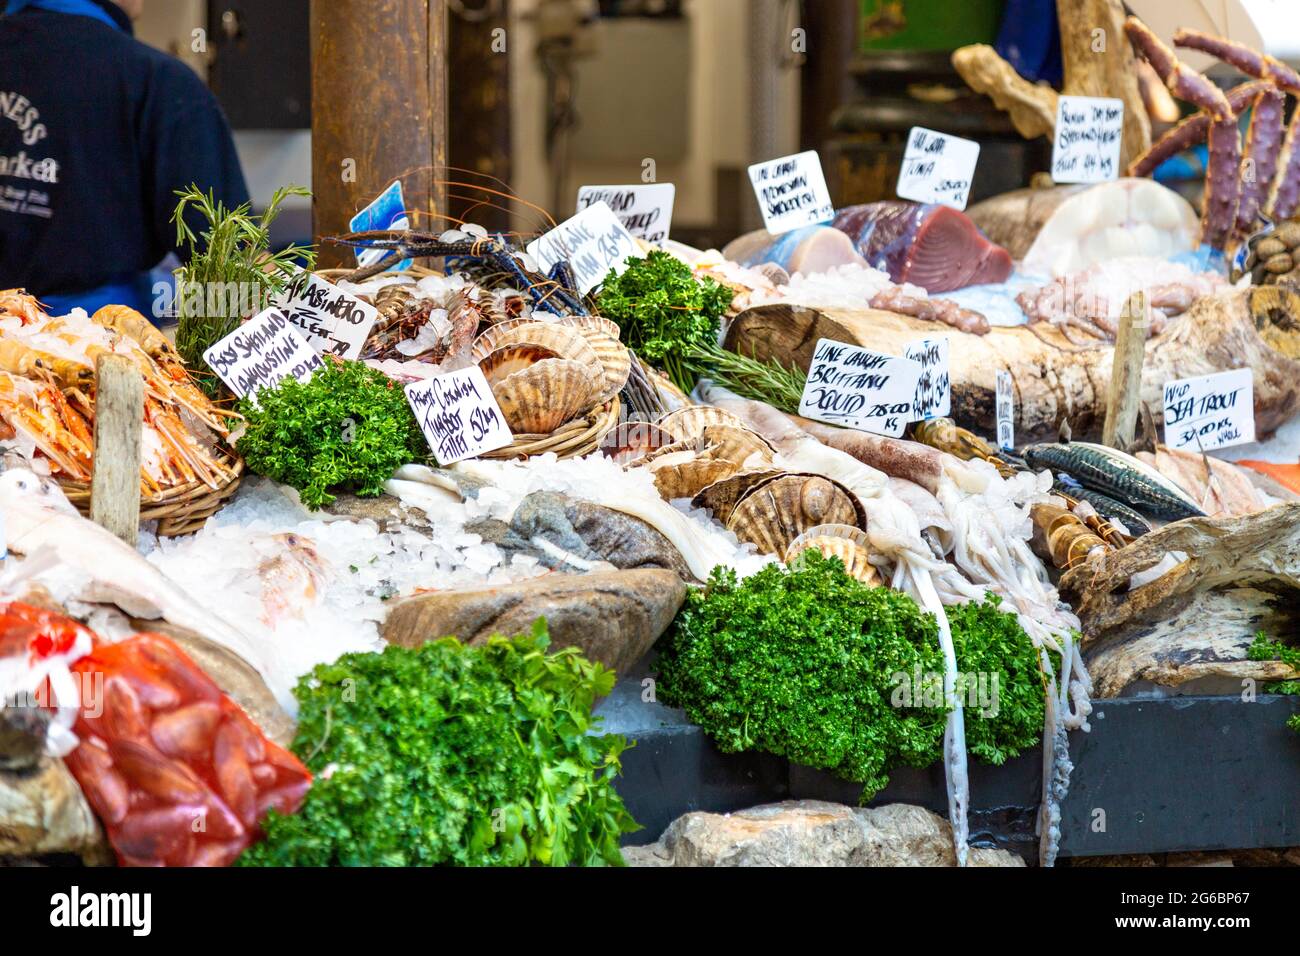 Seafood and fish at Furness Fish Markets stall at Borough Market, London Bridge, London, UK Stock Photo